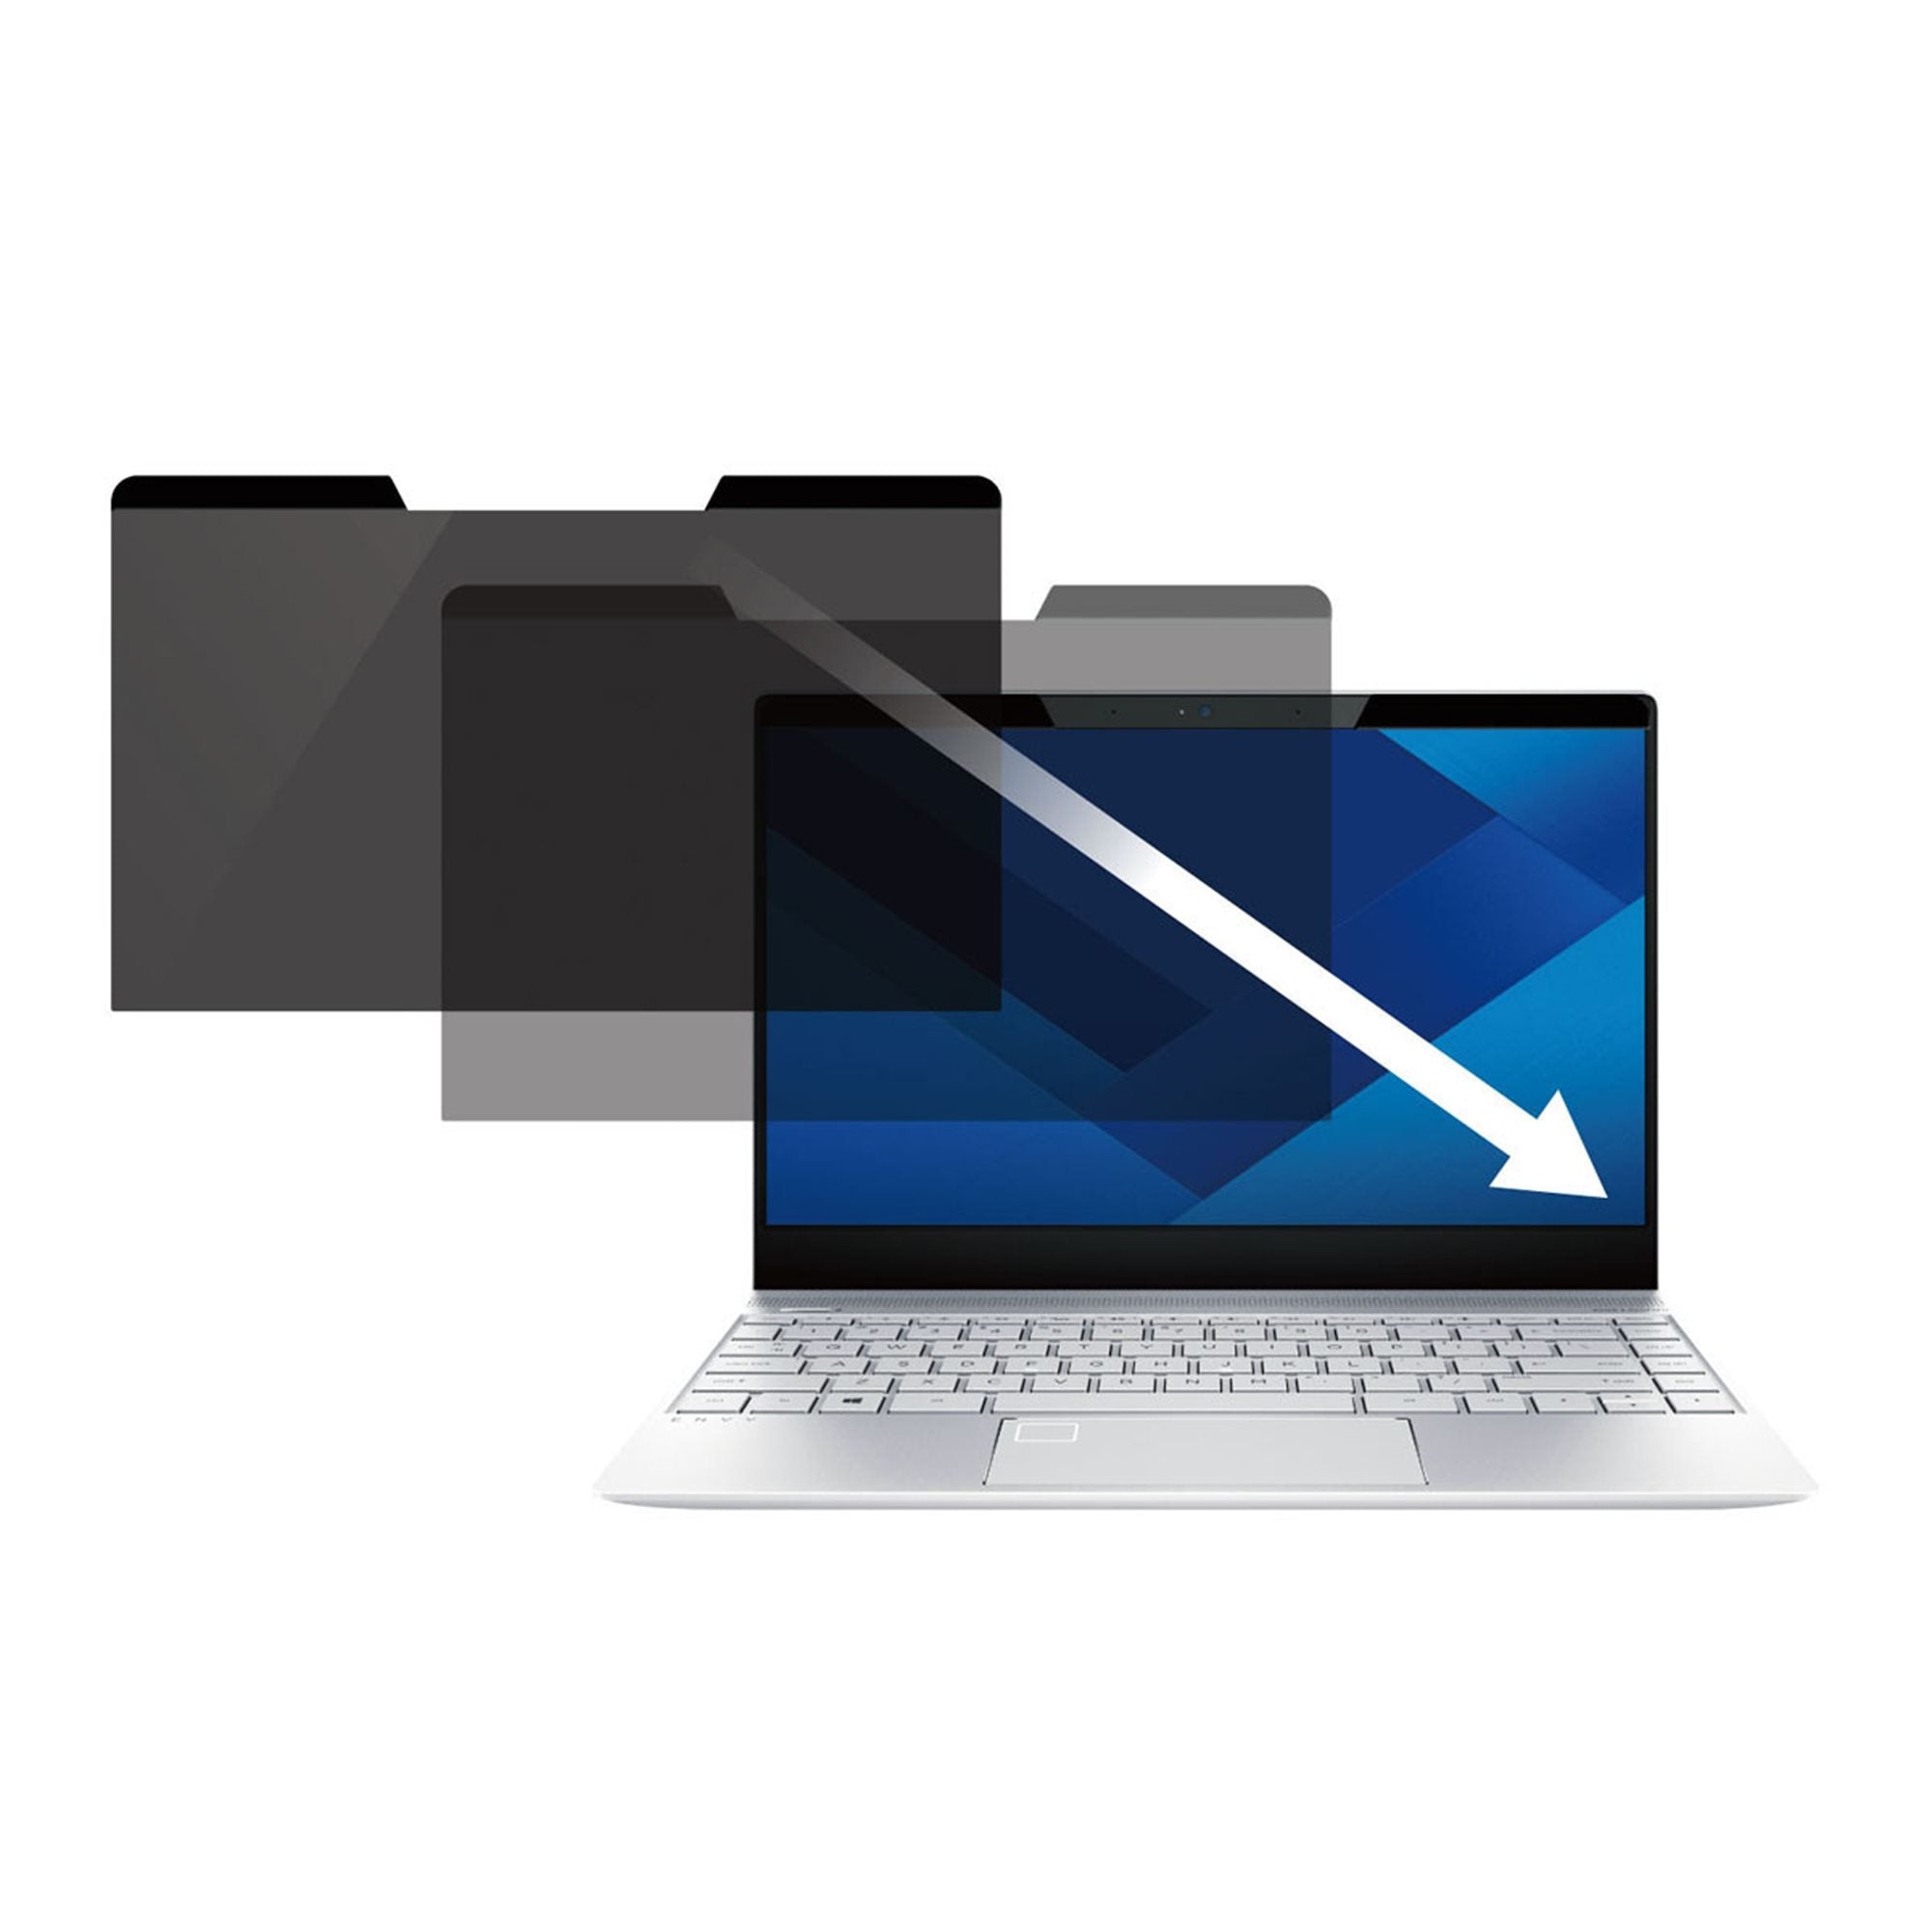 Filtro De Privacidad Para Laptop De 15.6 - Protector Filtro De Seguridad Para Pantalla De Laptop - Reduce Luz Azul 16:9 - Startech.Com Mod. Privscnlt15